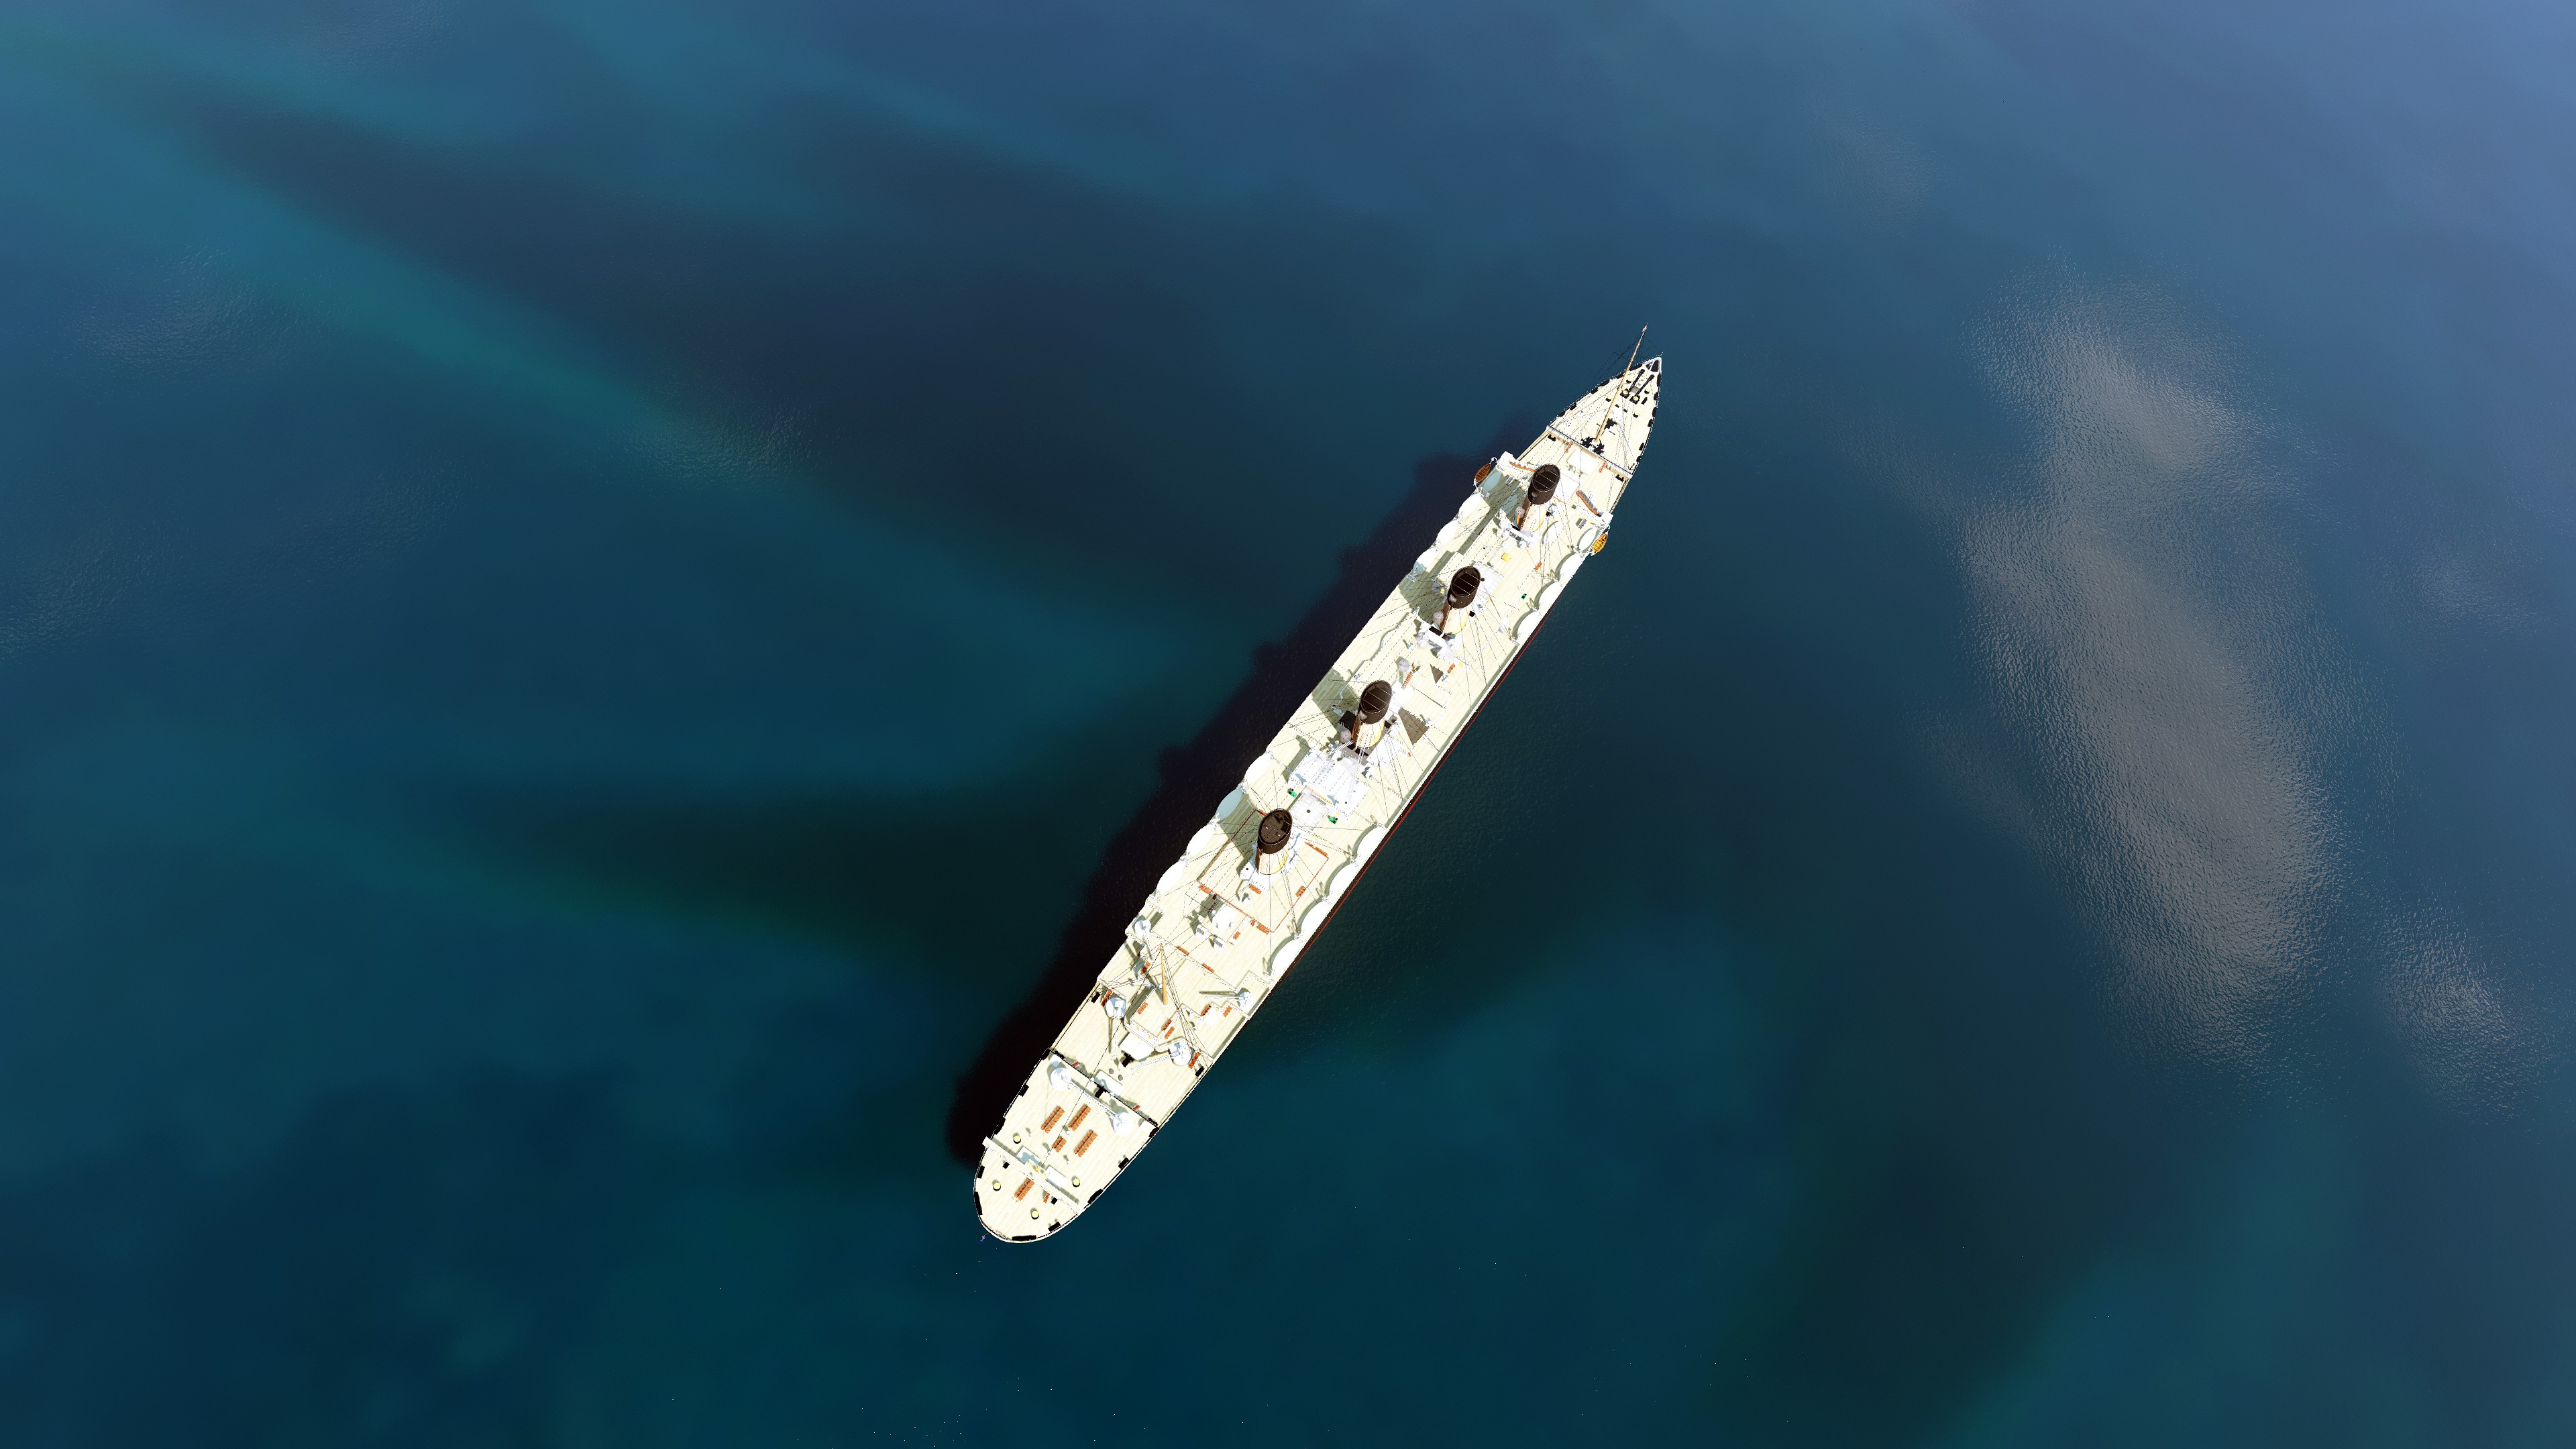 Gta5 Mods Com - roblox titanic 2 movie